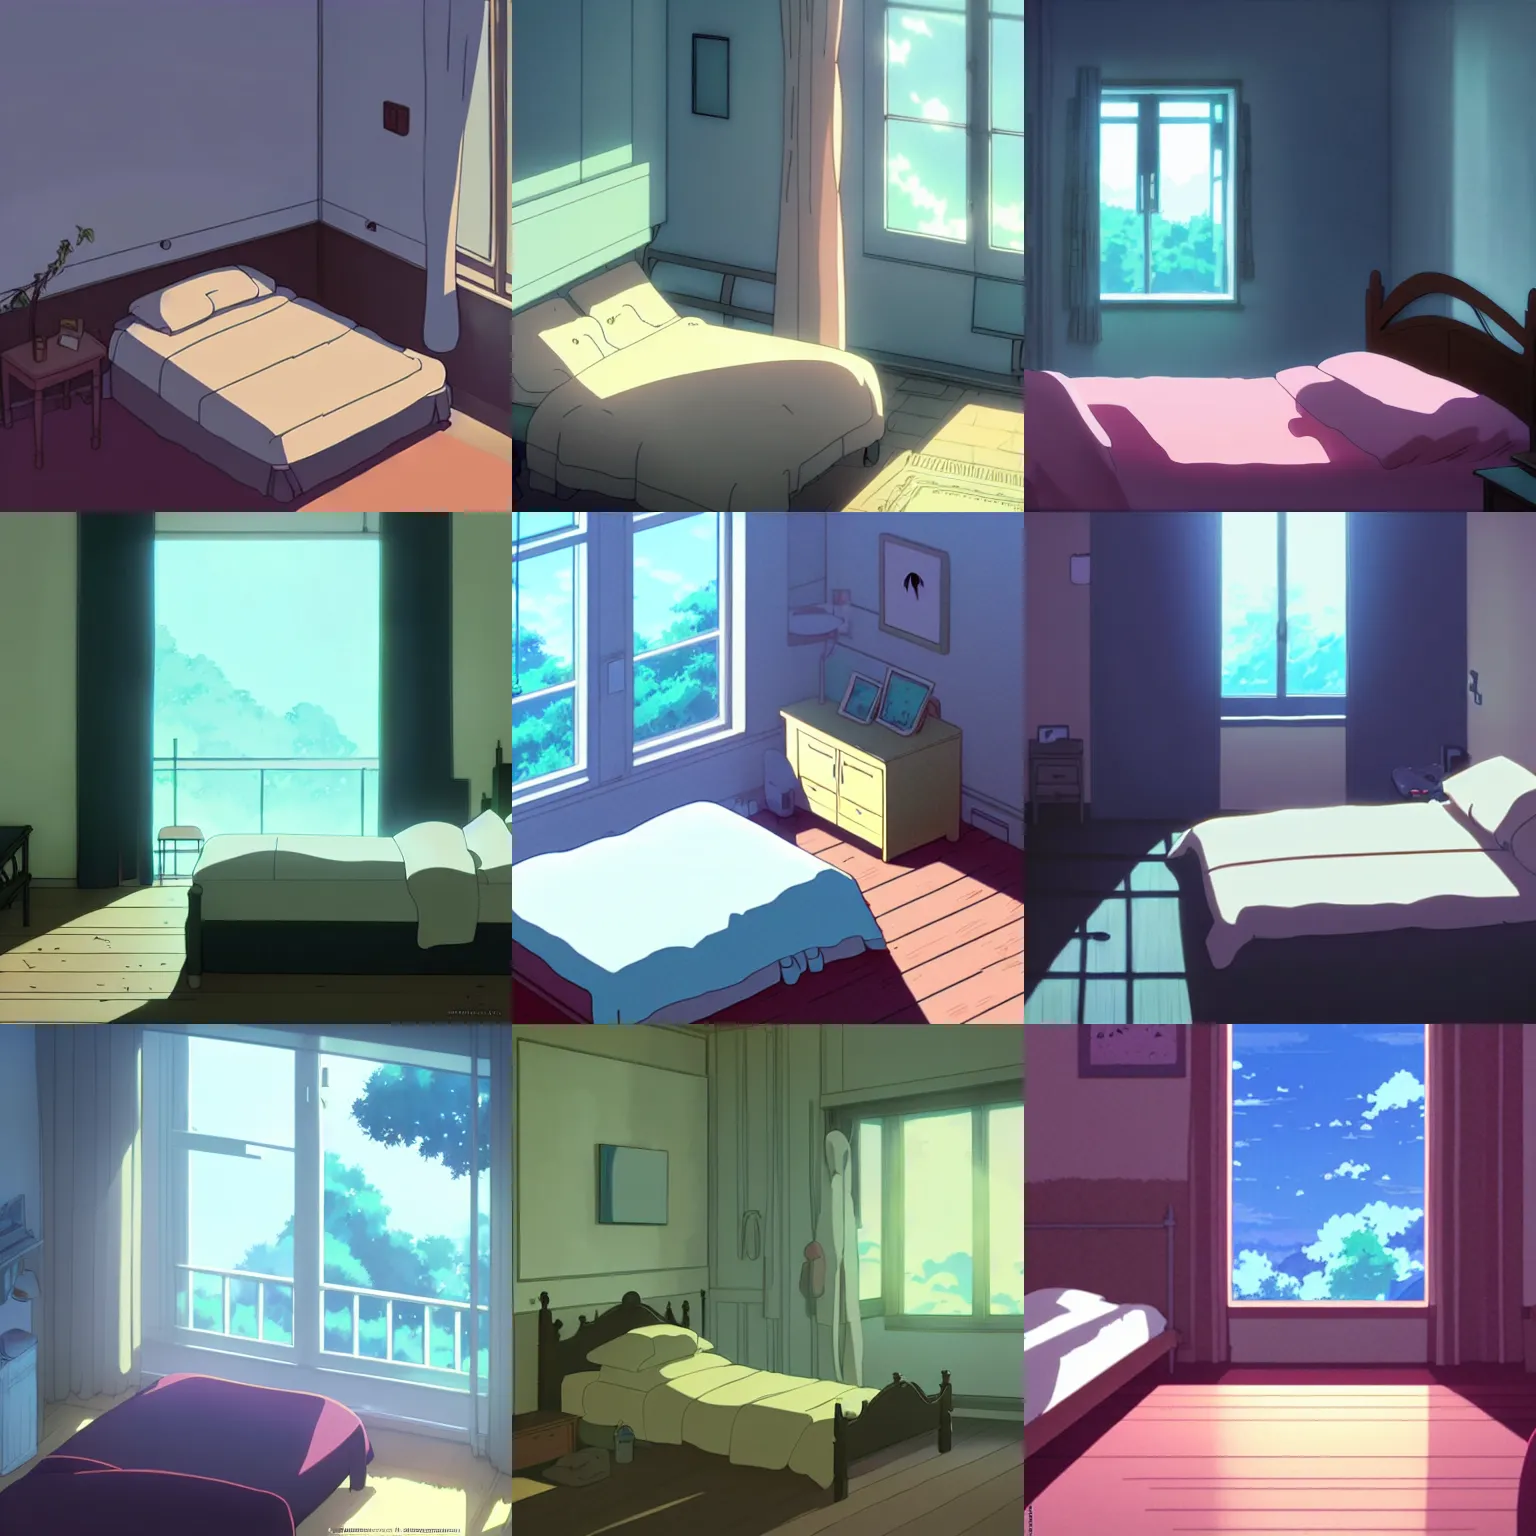 Prompt: bedroom, no people, a close - up, digital art, illustrations, by makoto shinkai and studio ghibli